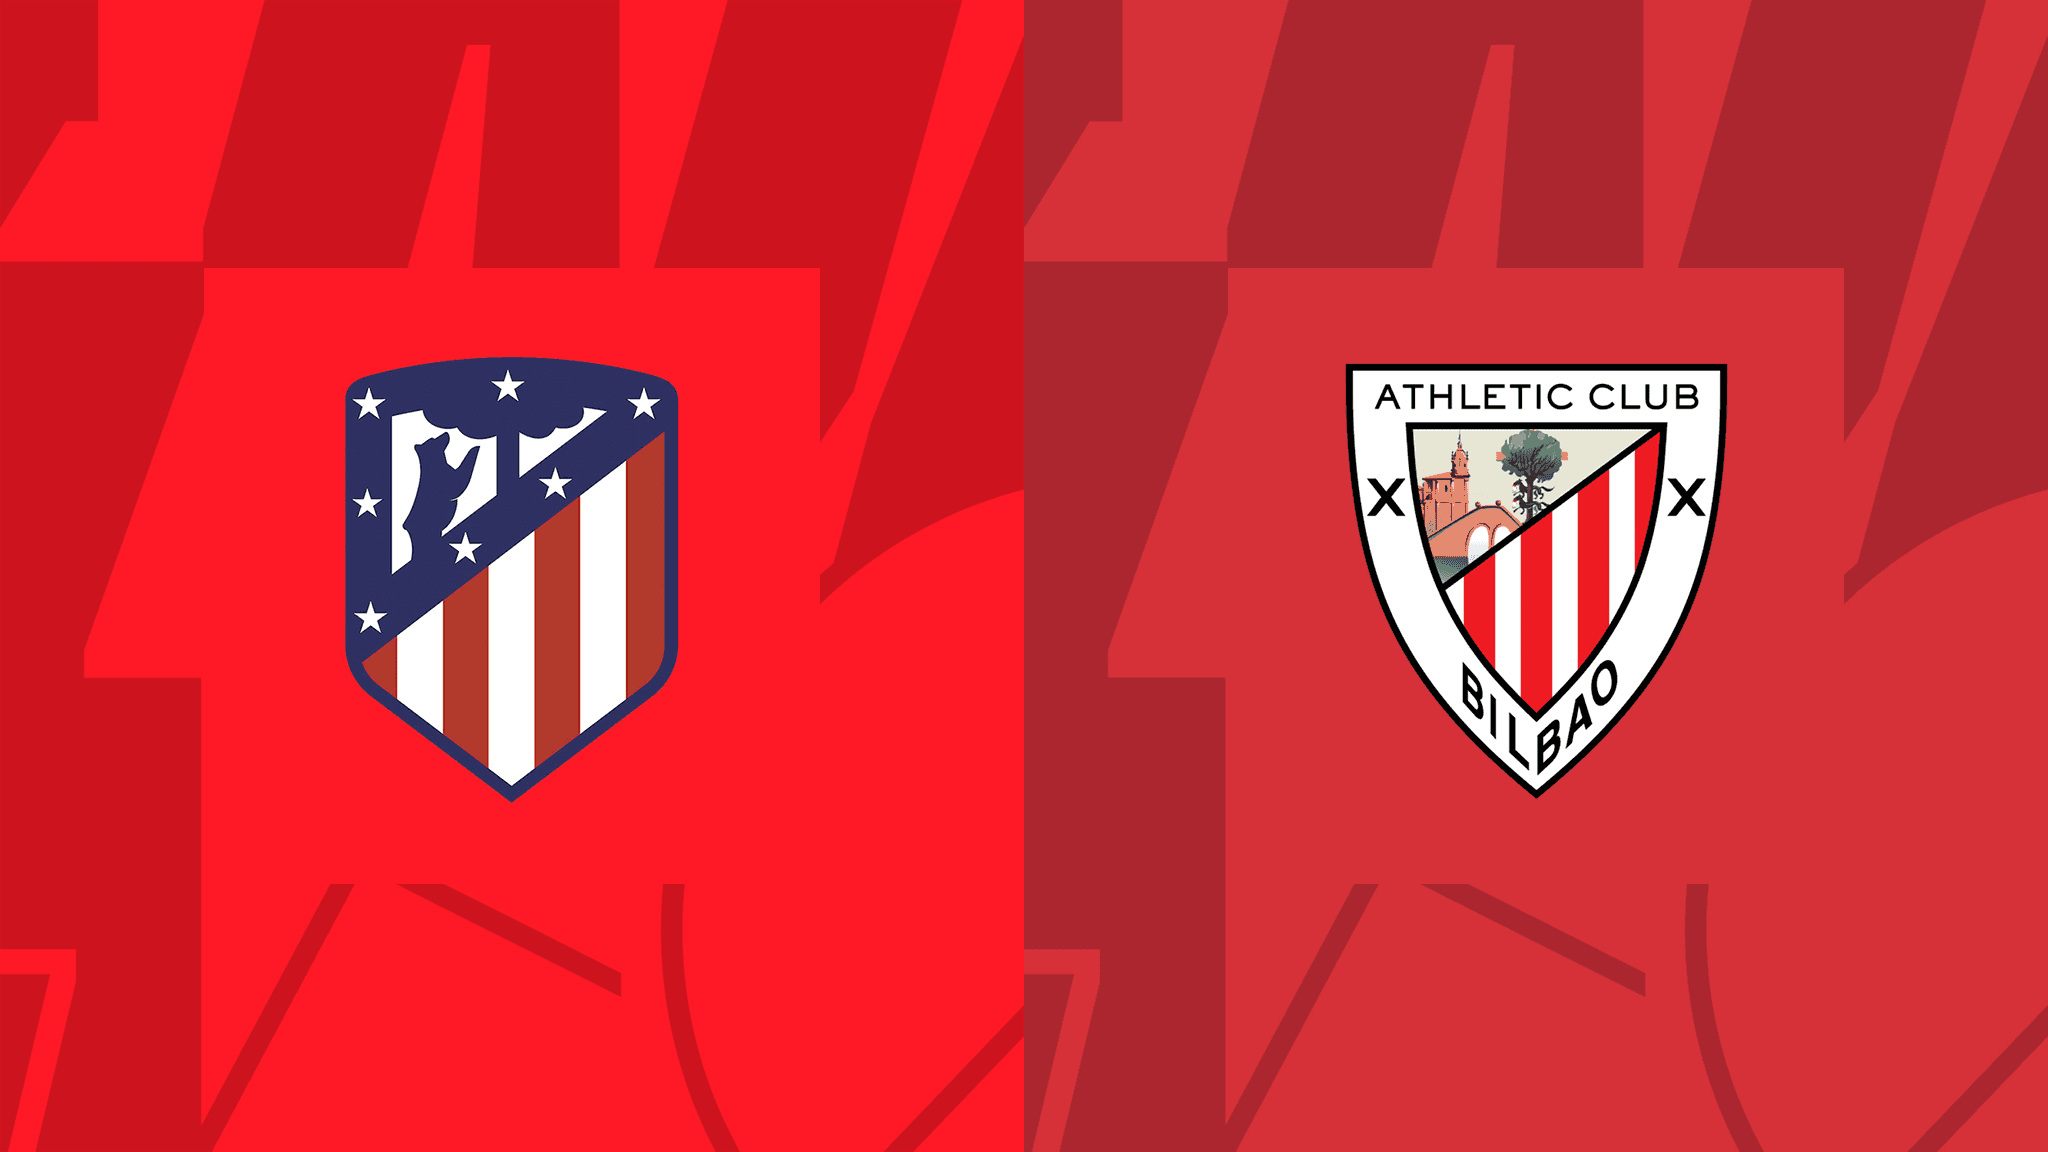 Atletico Madrid vs Athletic Club (27 April, 21:00)